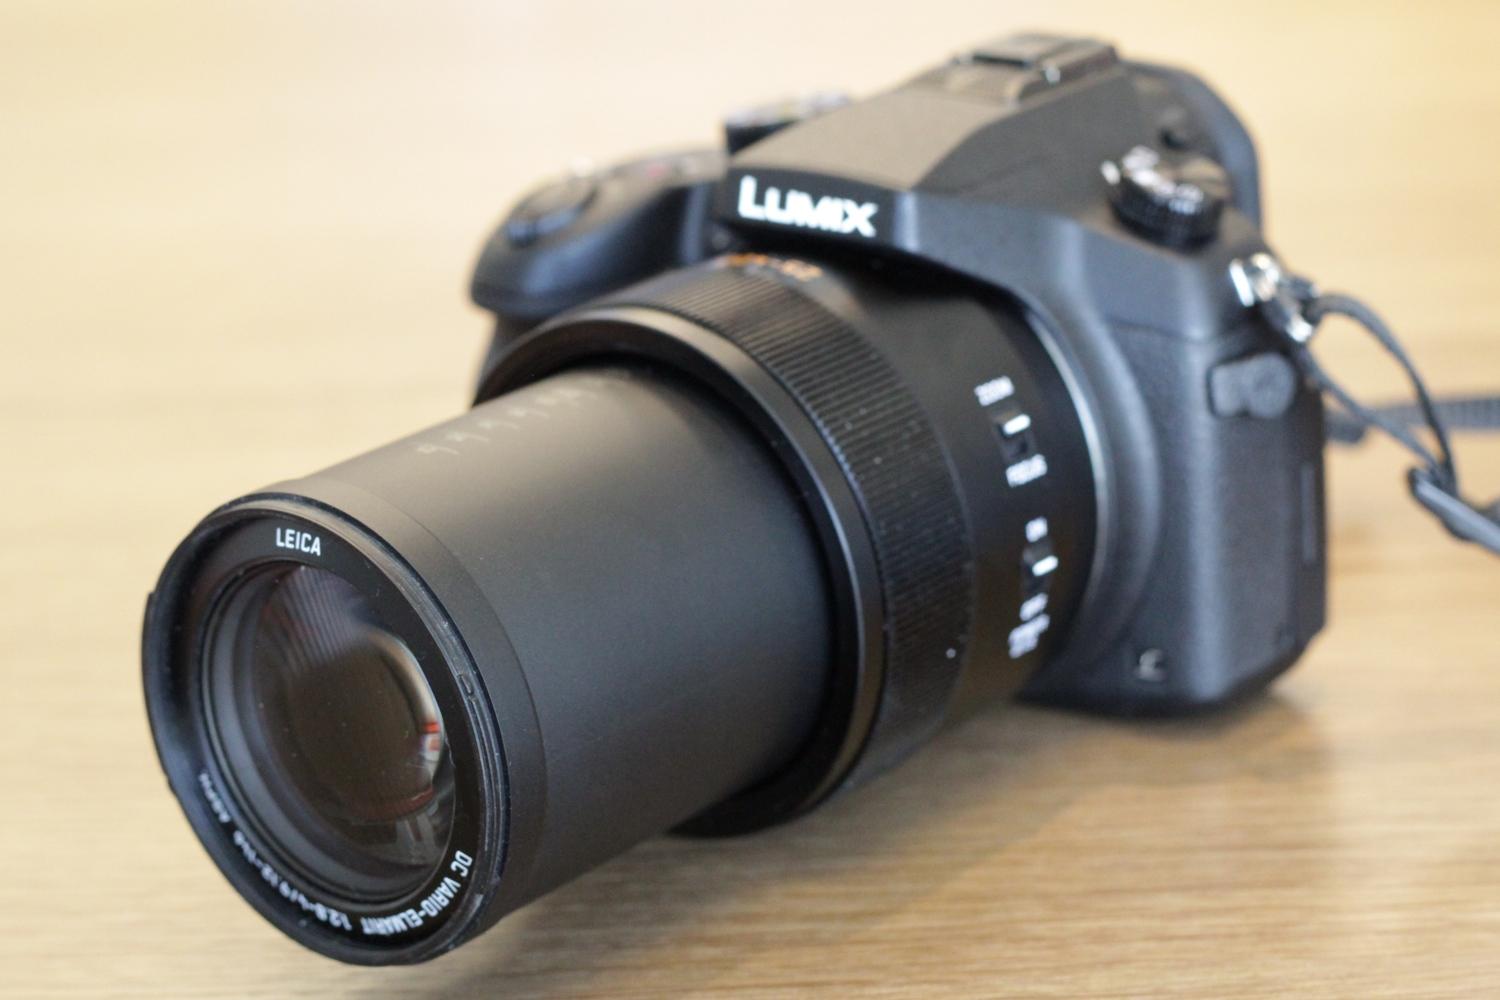 panasonic introduces 4k capable lumix fz1000 bridge camera img 1295